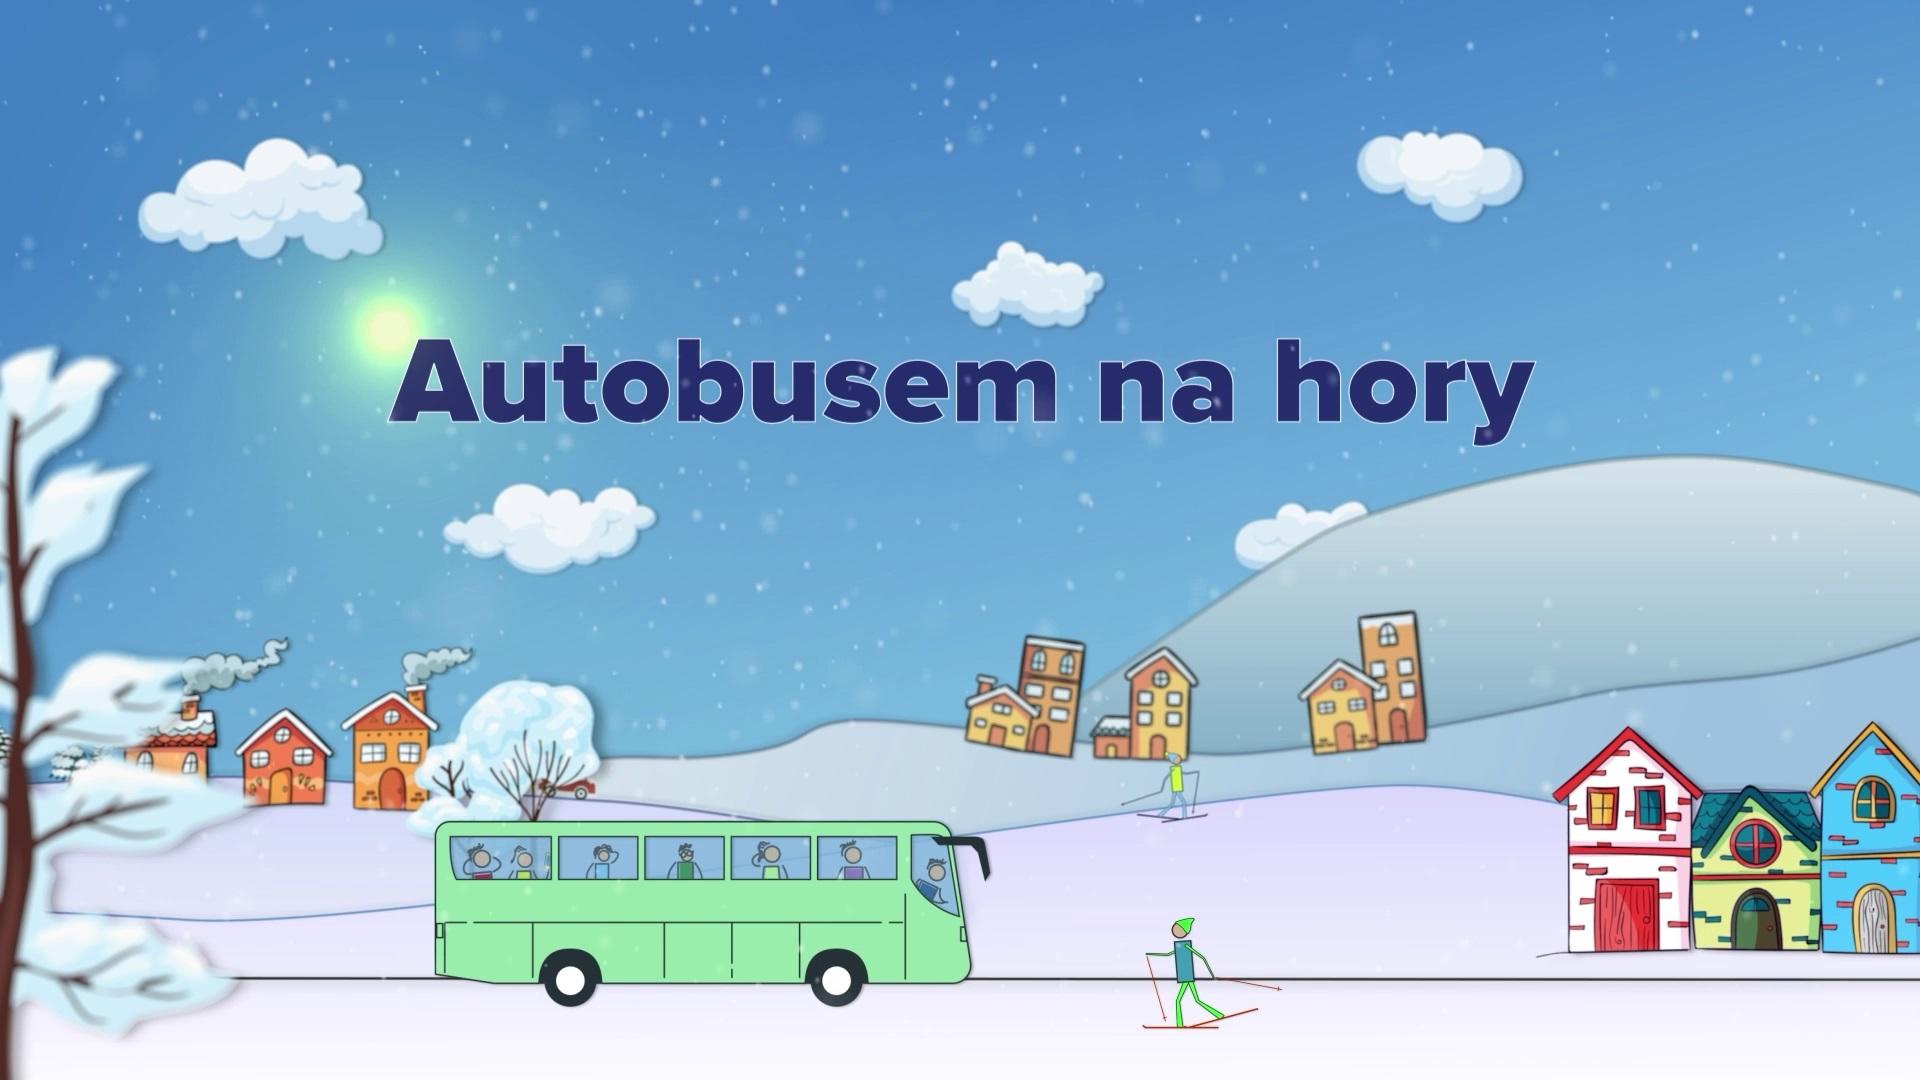 Autobusem na hory